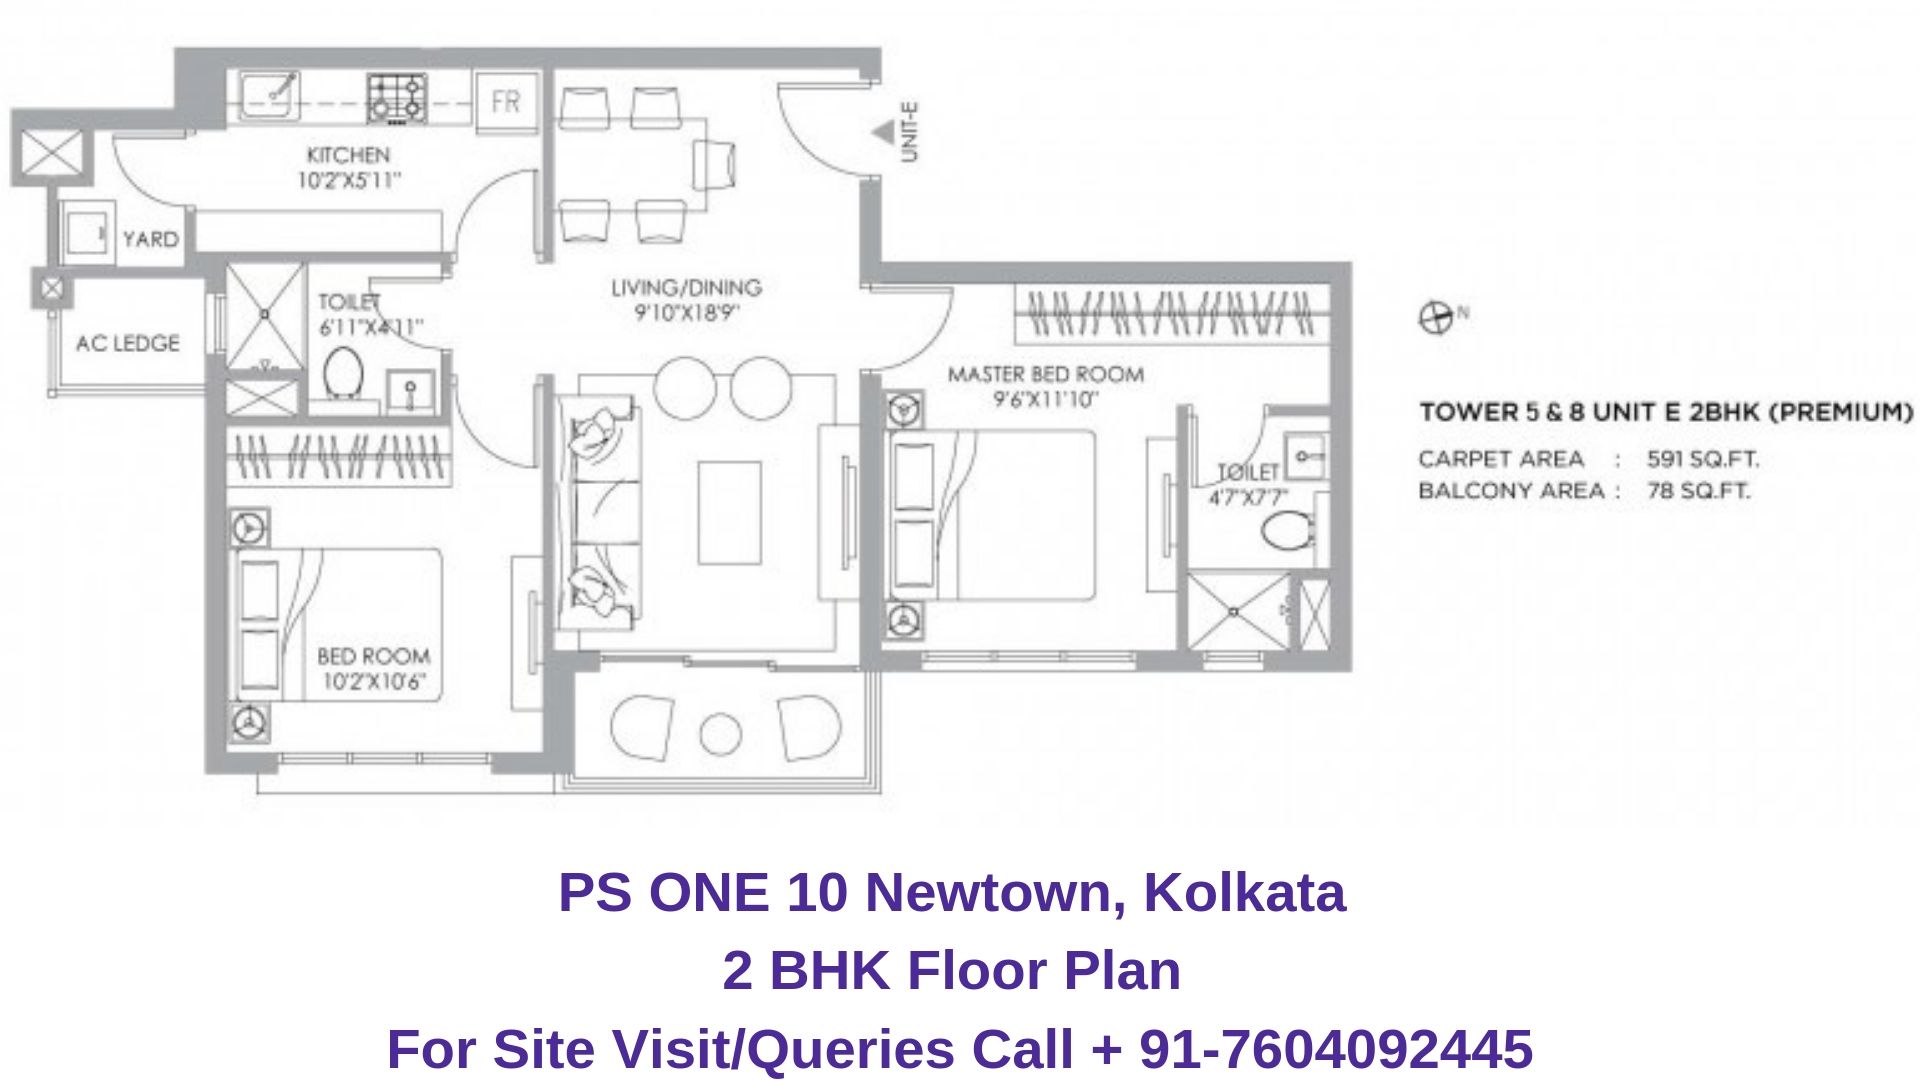 PS ONE 10 Newtown, Kolkata 2 BHK Floor Plan